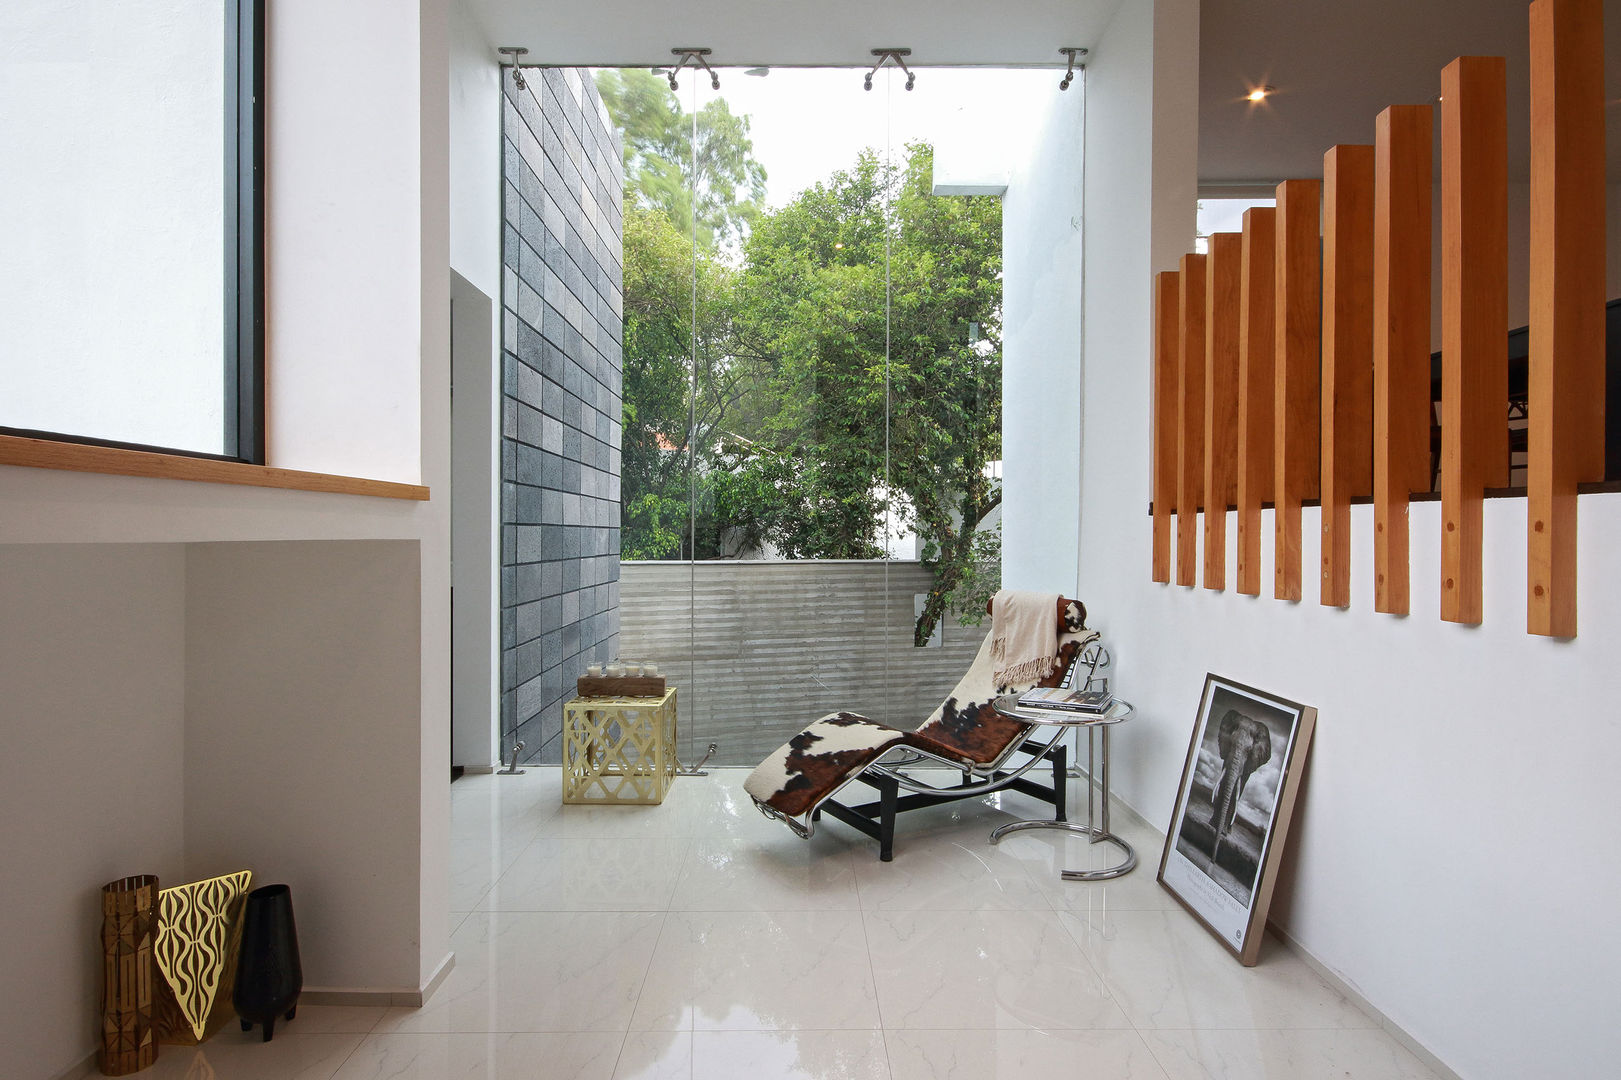 Ampliación de casa en Ciudad de Mexico - Casa BG, All Arquitectura All Arquitectura الممر والمدخل زجاج